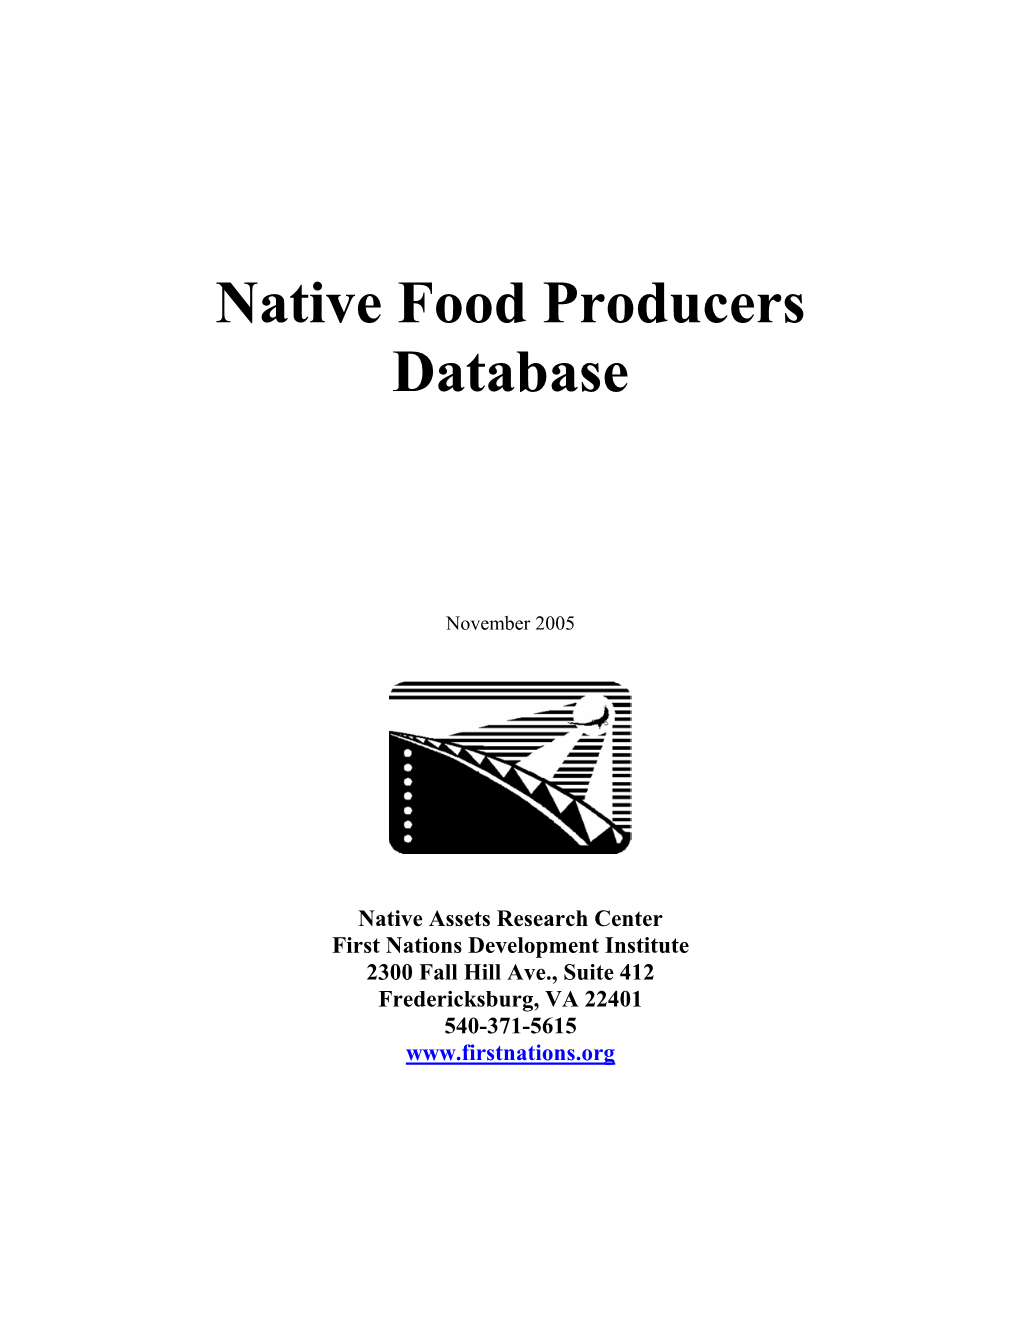 Native Food Producers Database